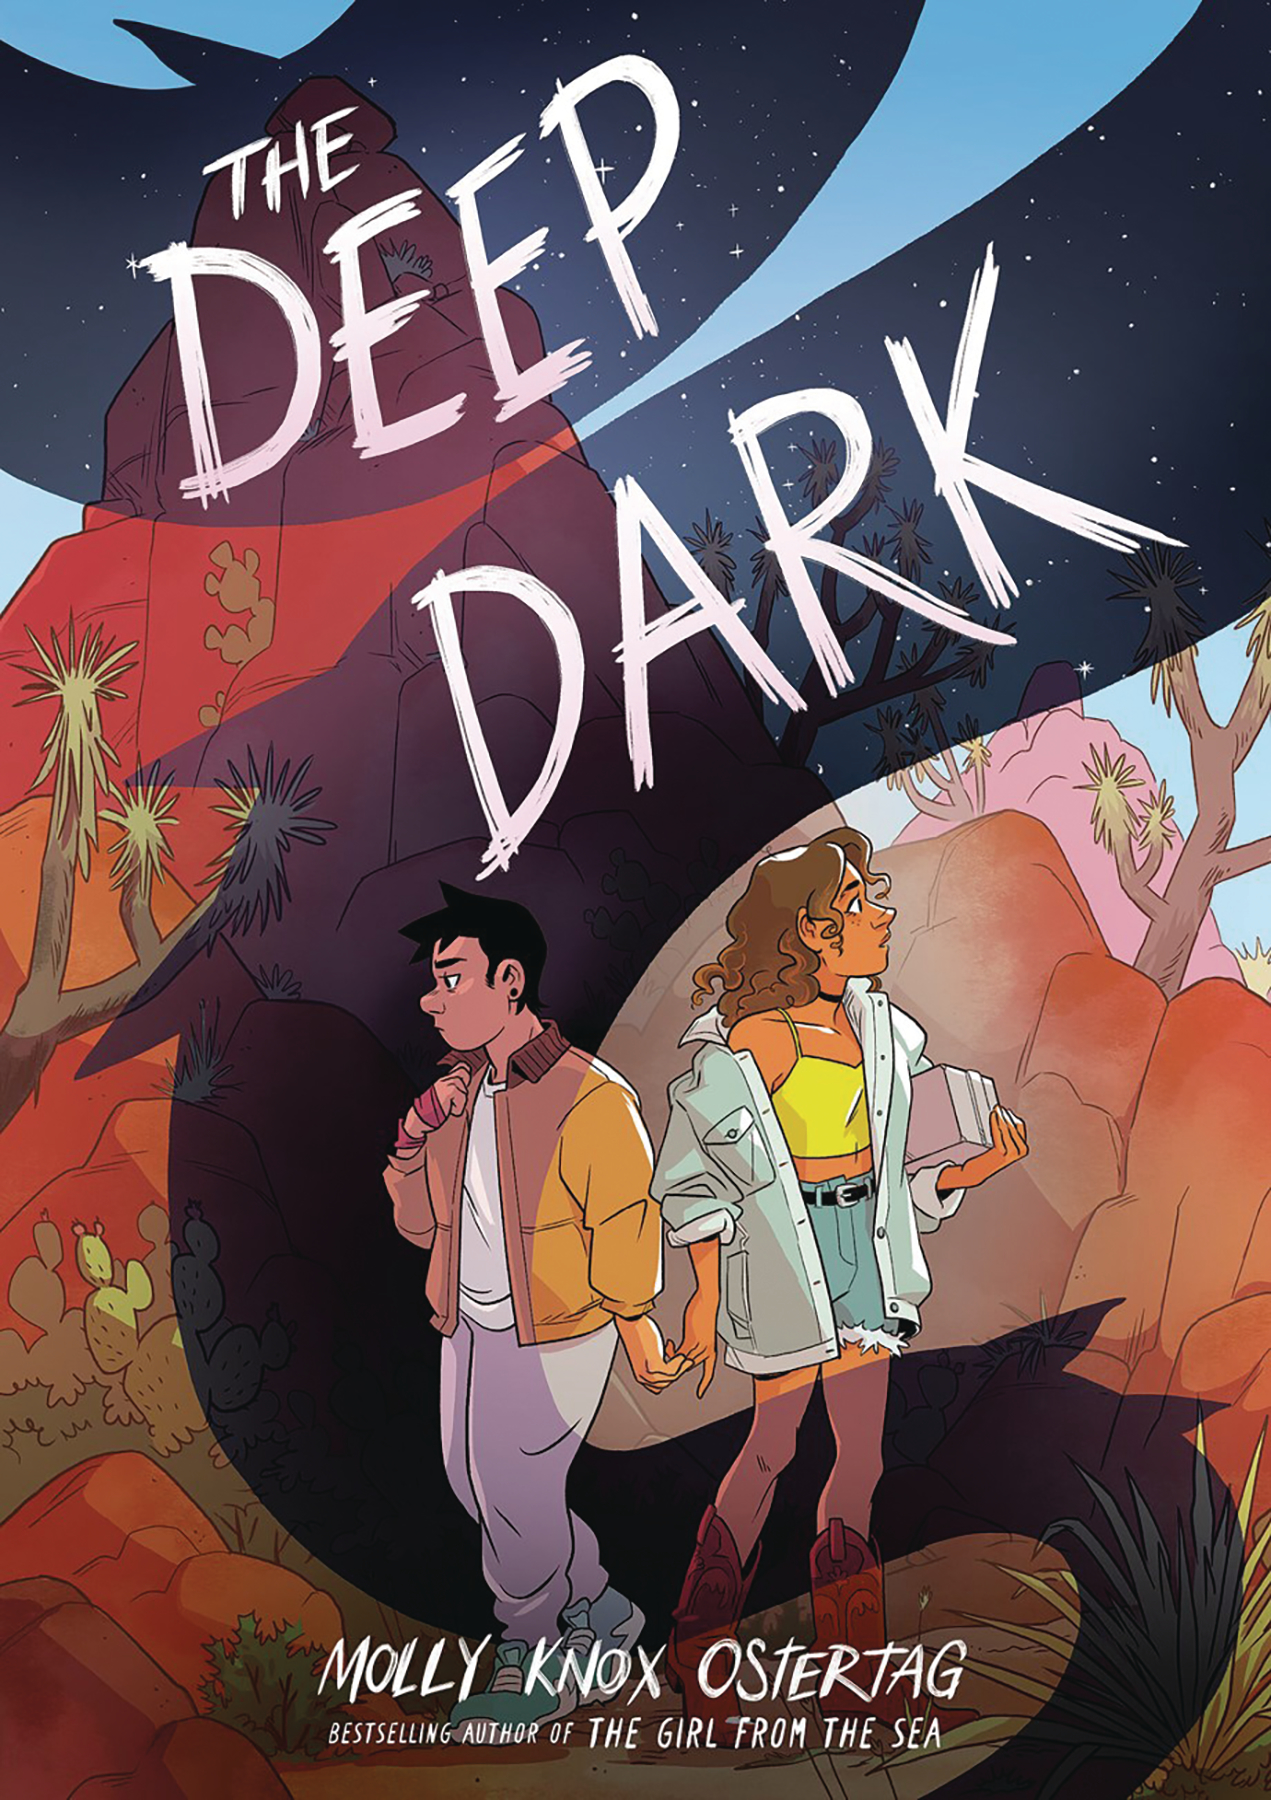 Deep Dark Graphic Novel